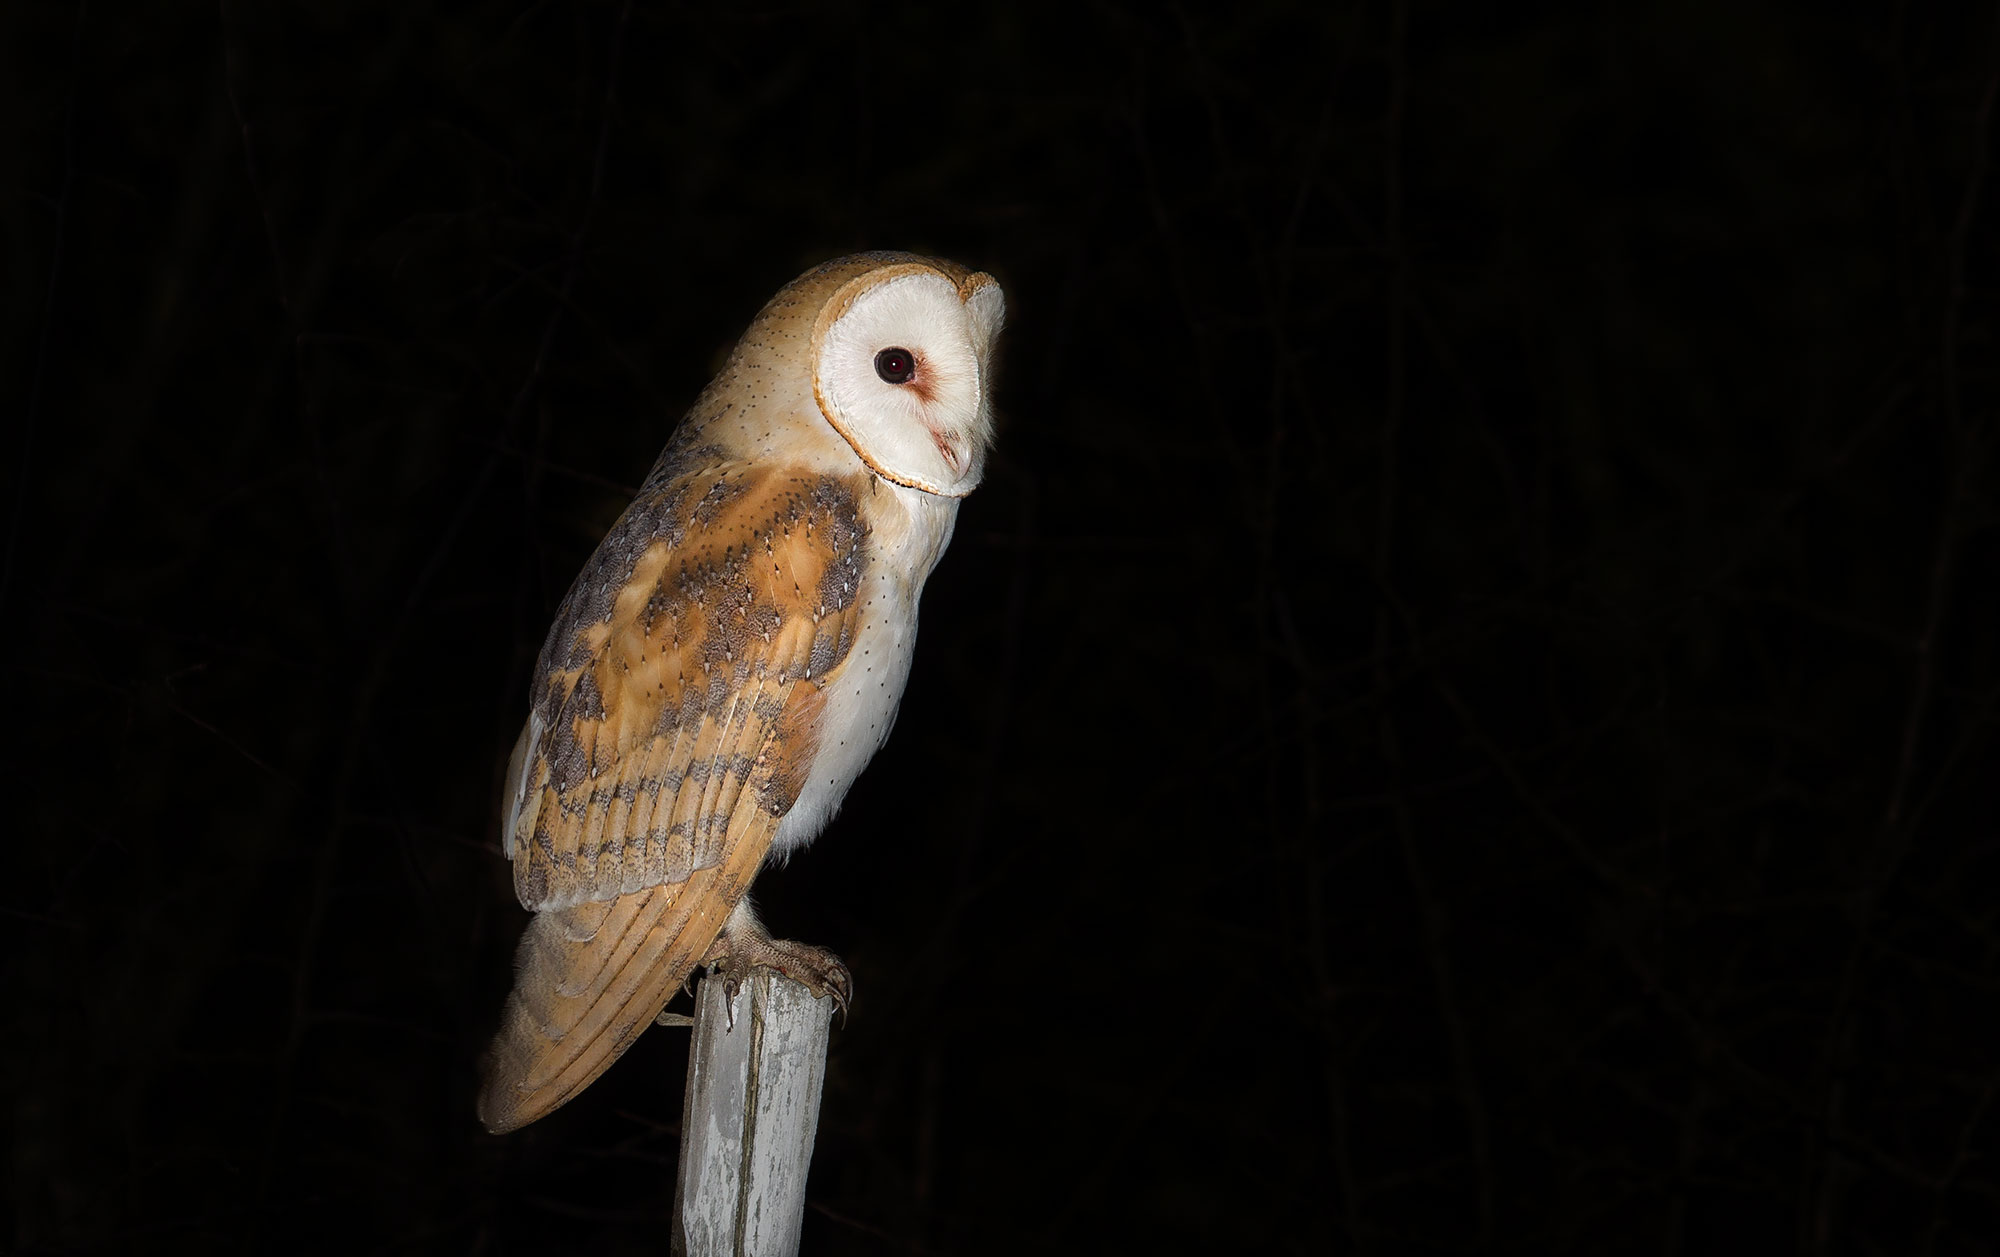 Barn owl in observation...